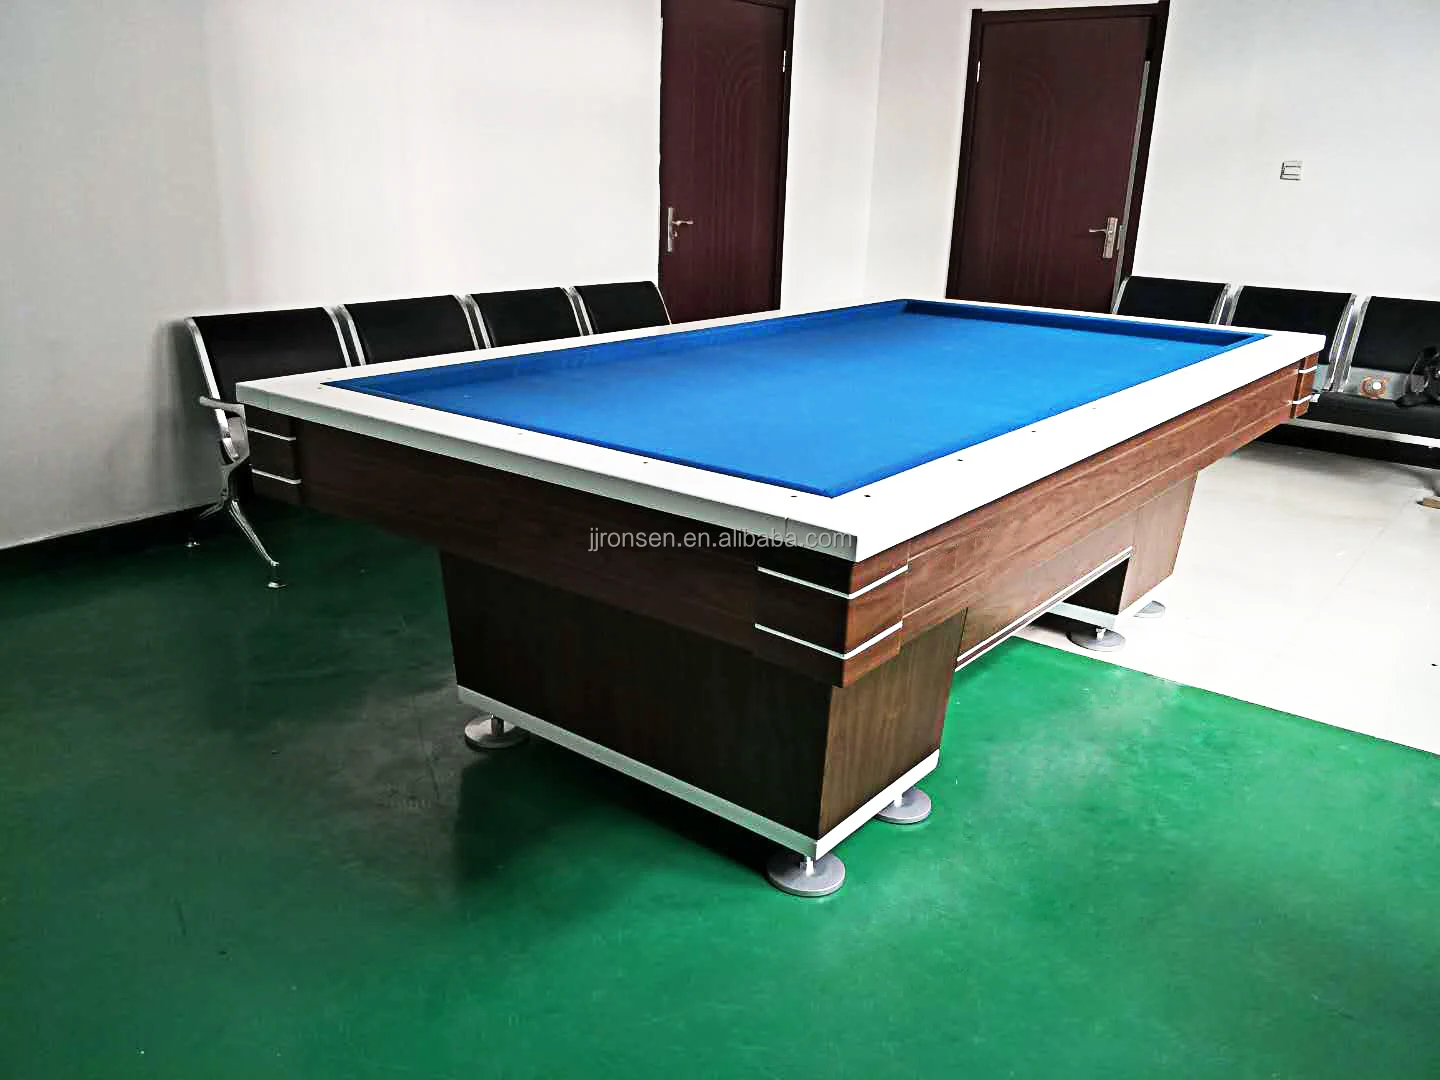 Details about   IBS Billiard Table Cleaning cloth 10ea Blue 3Cusion Carom Billiards Club Korea 